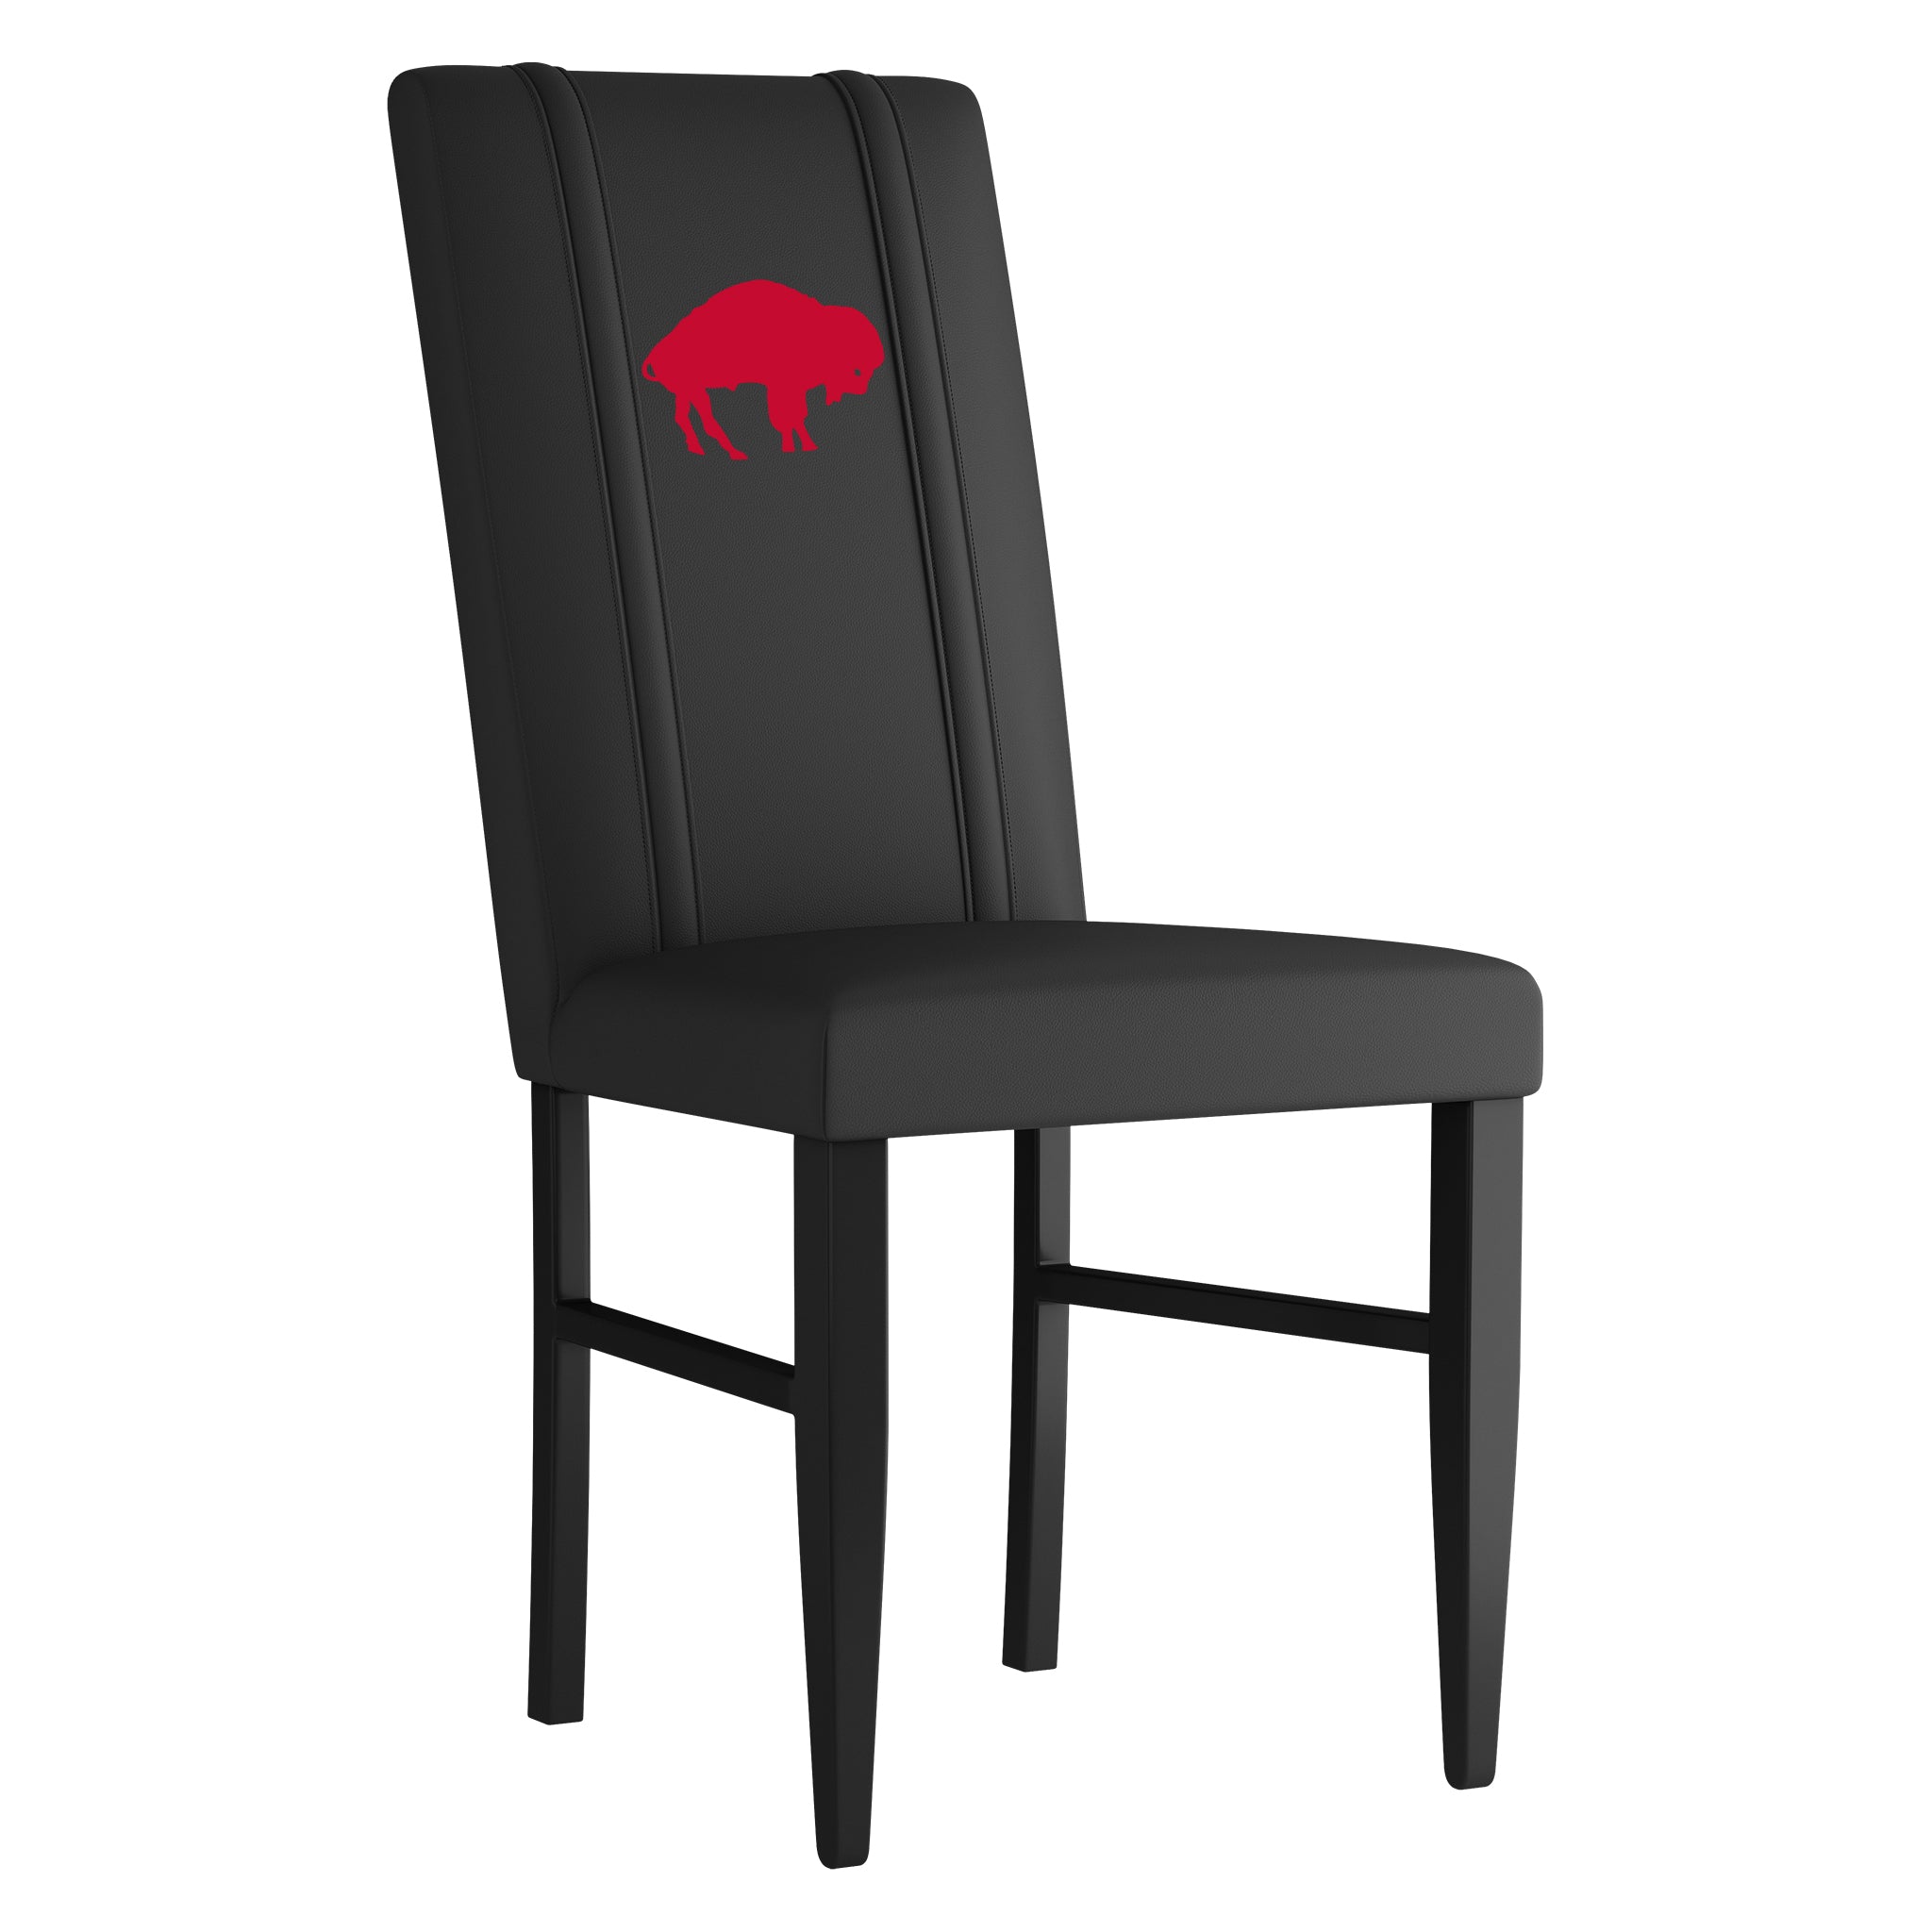 Buffalo Bills Side Chair 2000